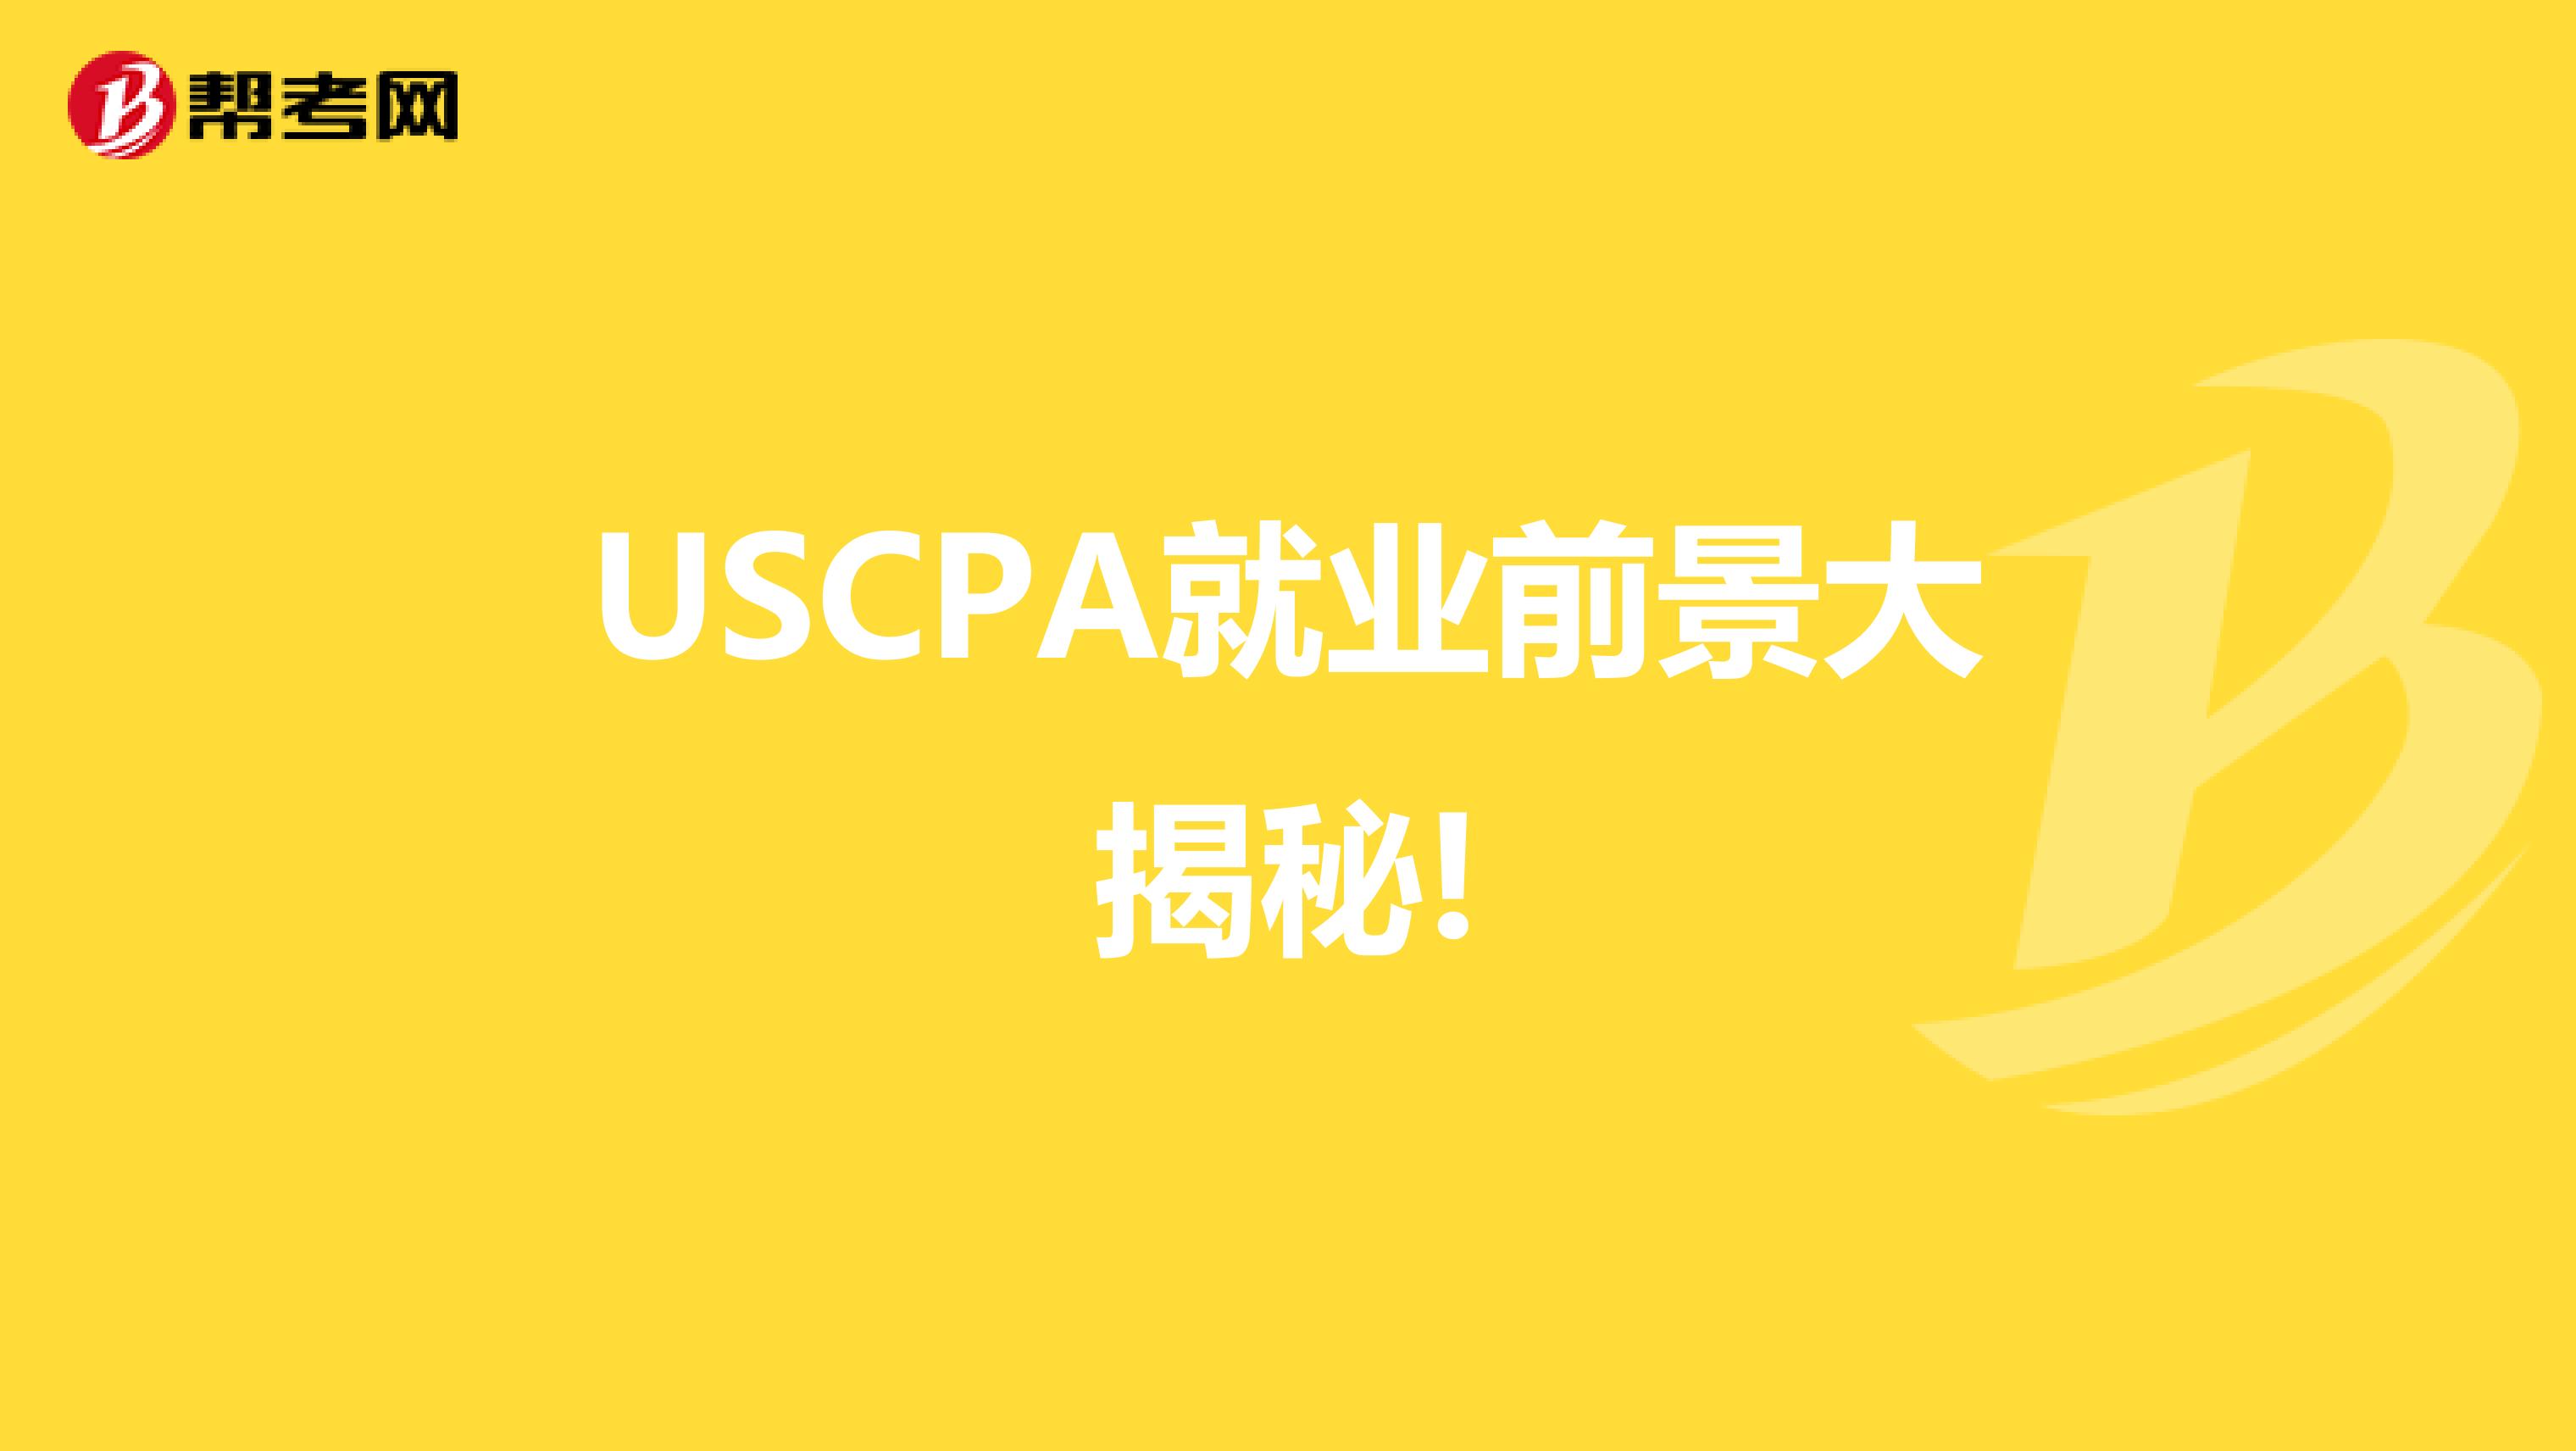 USCPA就业前景大揭秘!